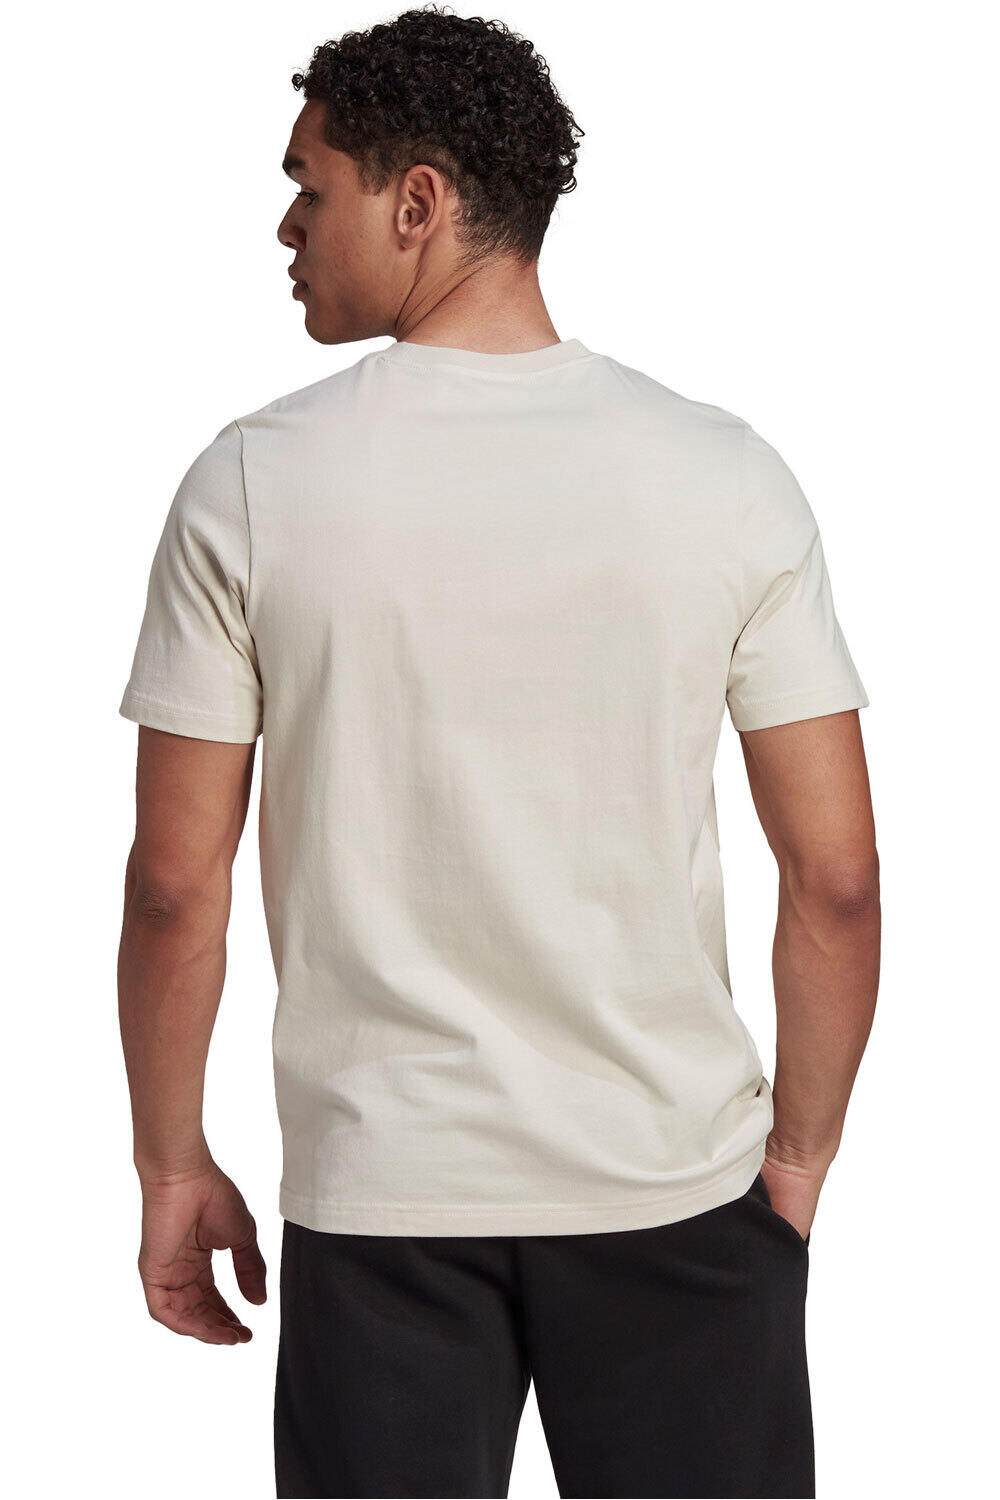 Comprar en oferta Adidas Essentials Big Logo T-Shirt aluminium white